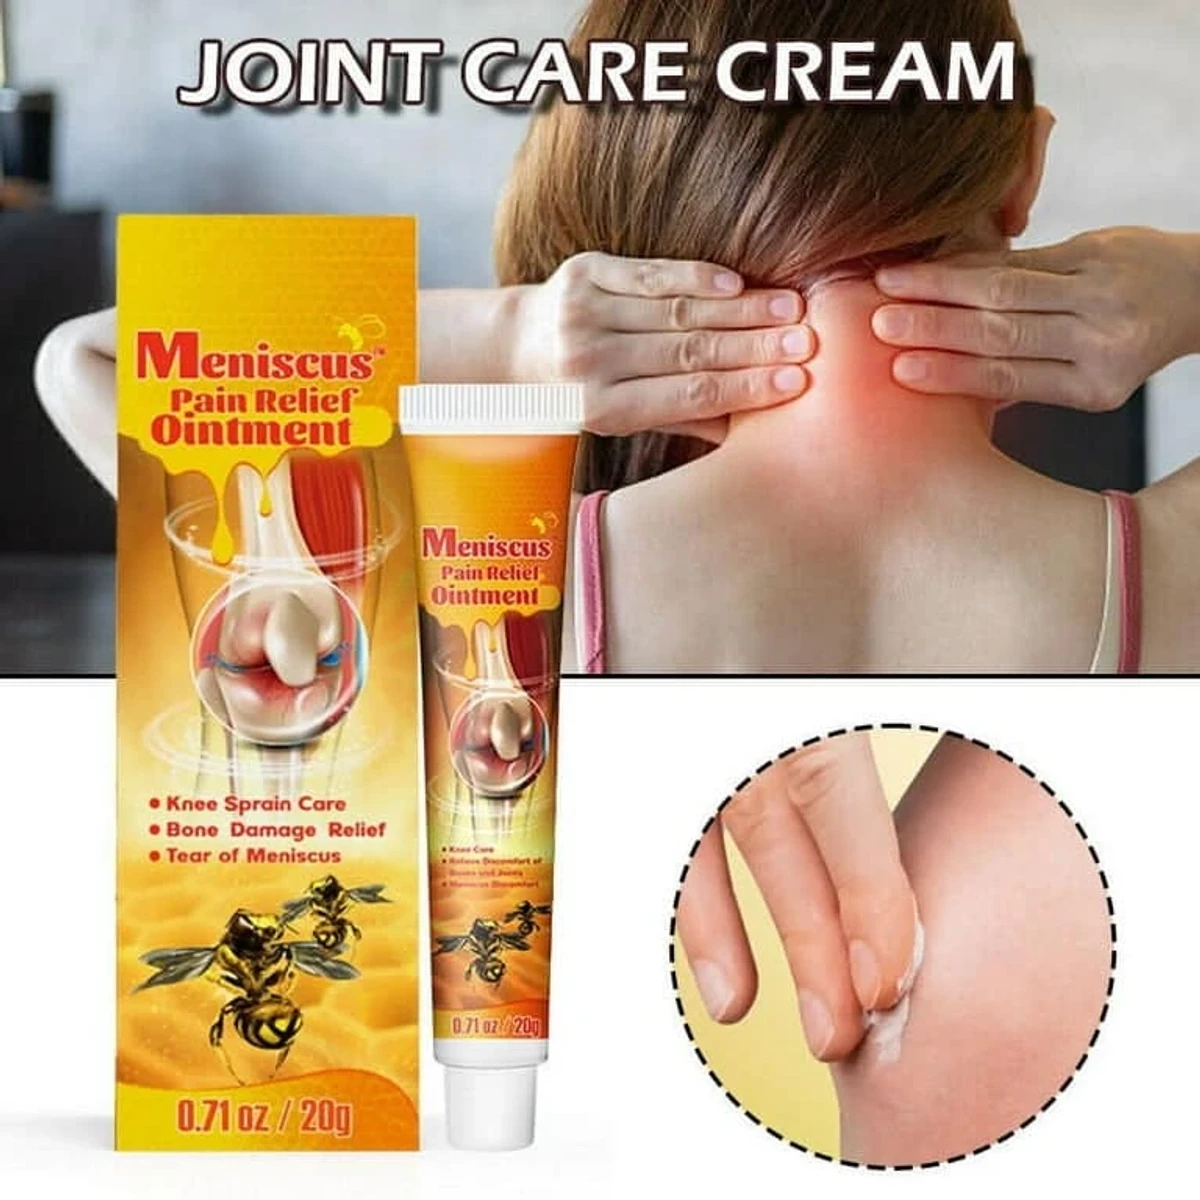 Meniscus Pain Relief Ointment